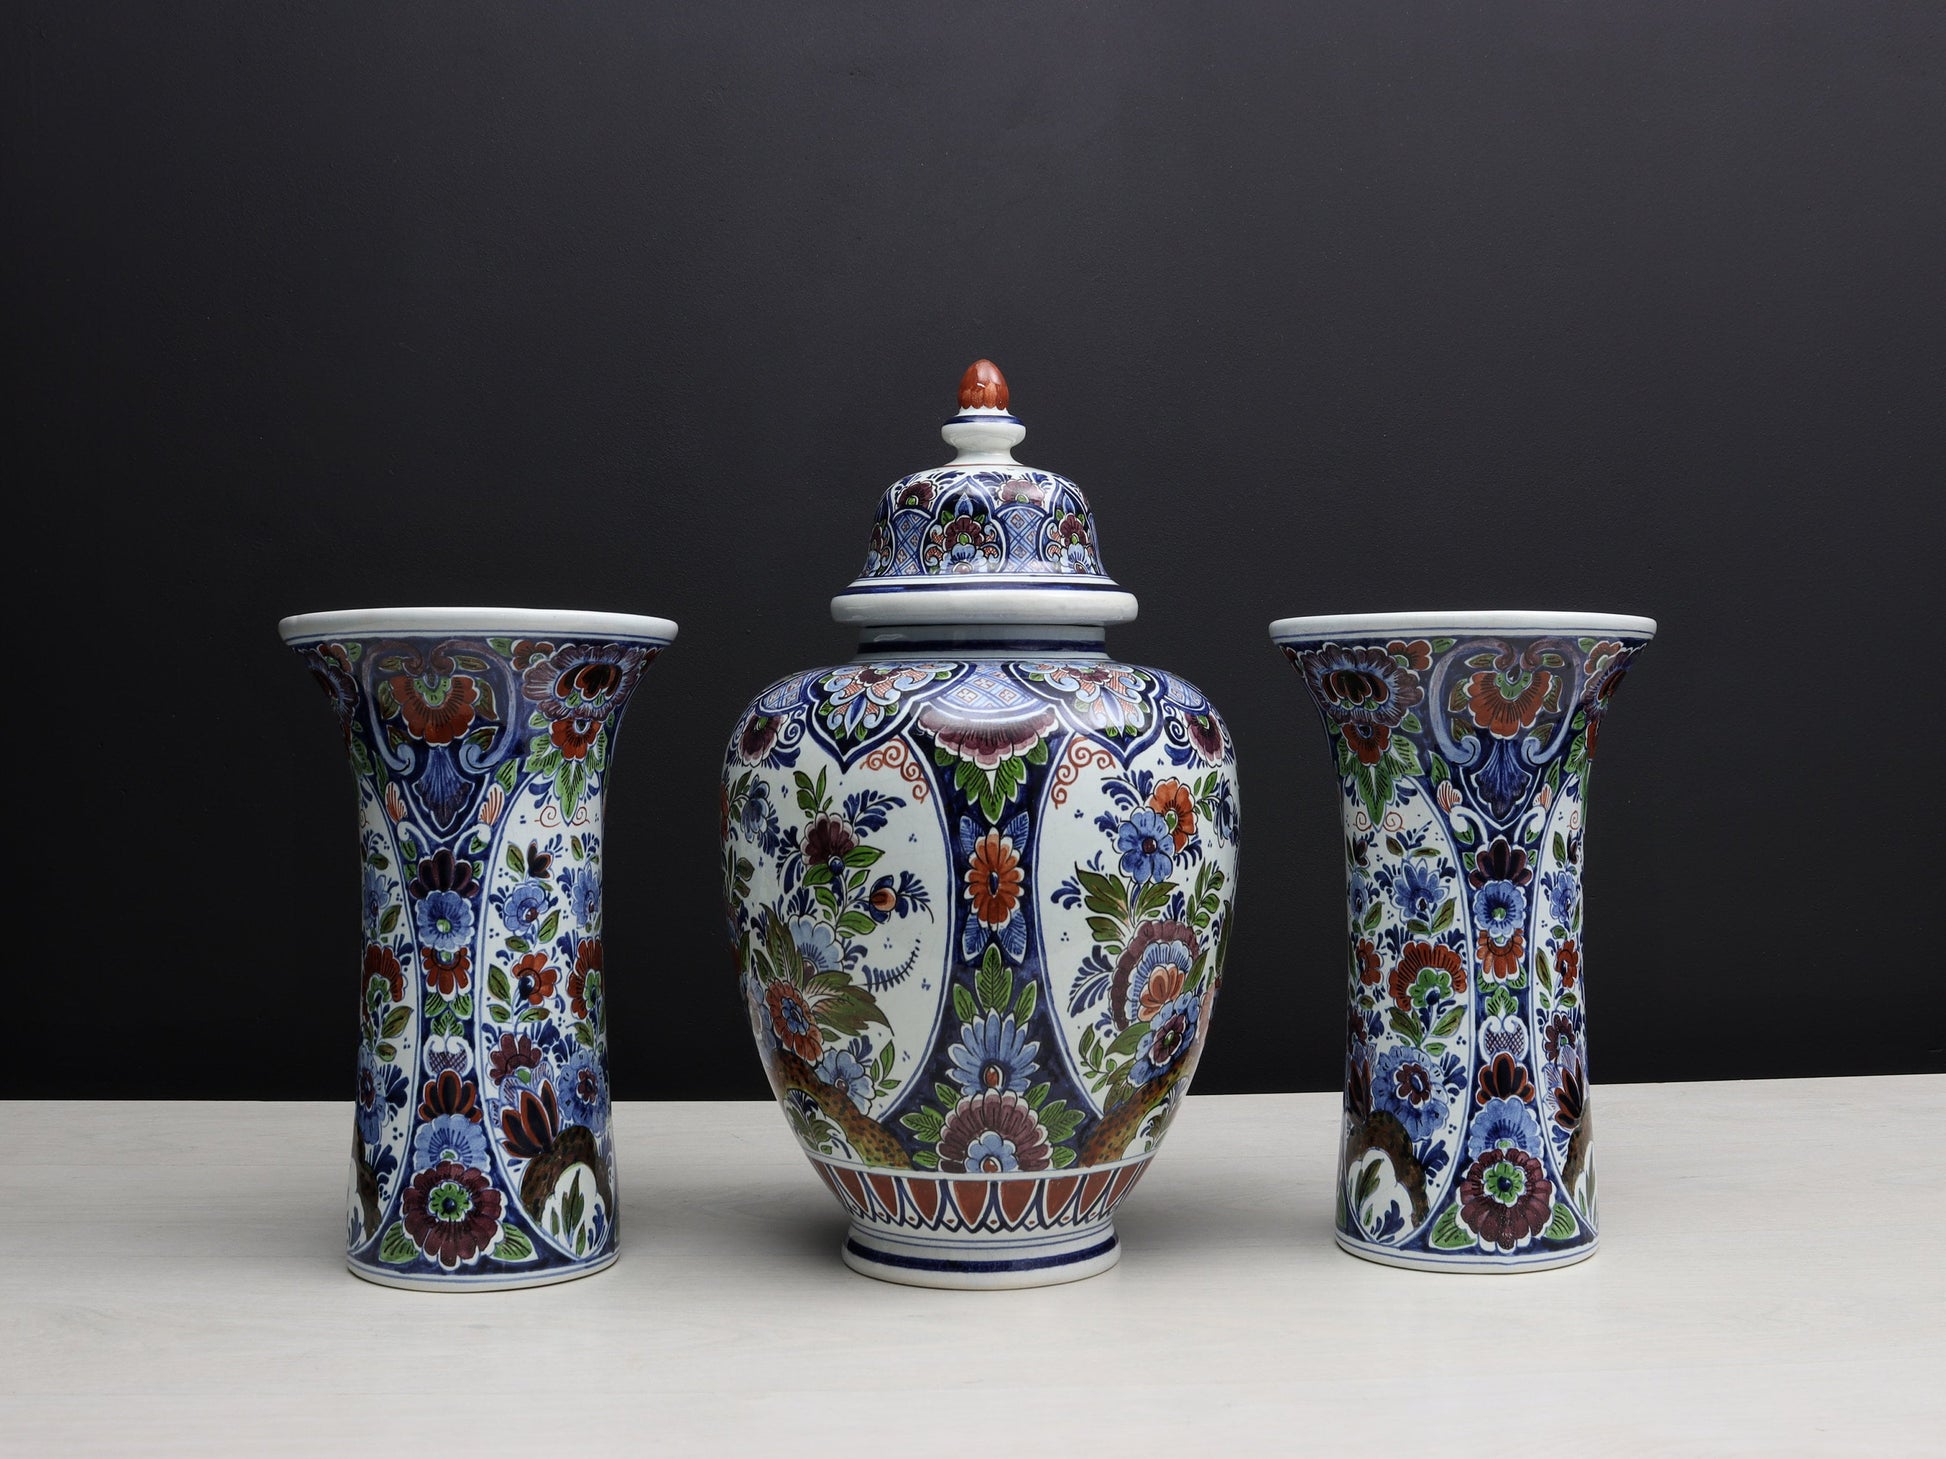 Unique Deft Pottery Ceramic Vase Set in Rare Multi Colors | Decorative Delft Vase-Unique Gift Ideas